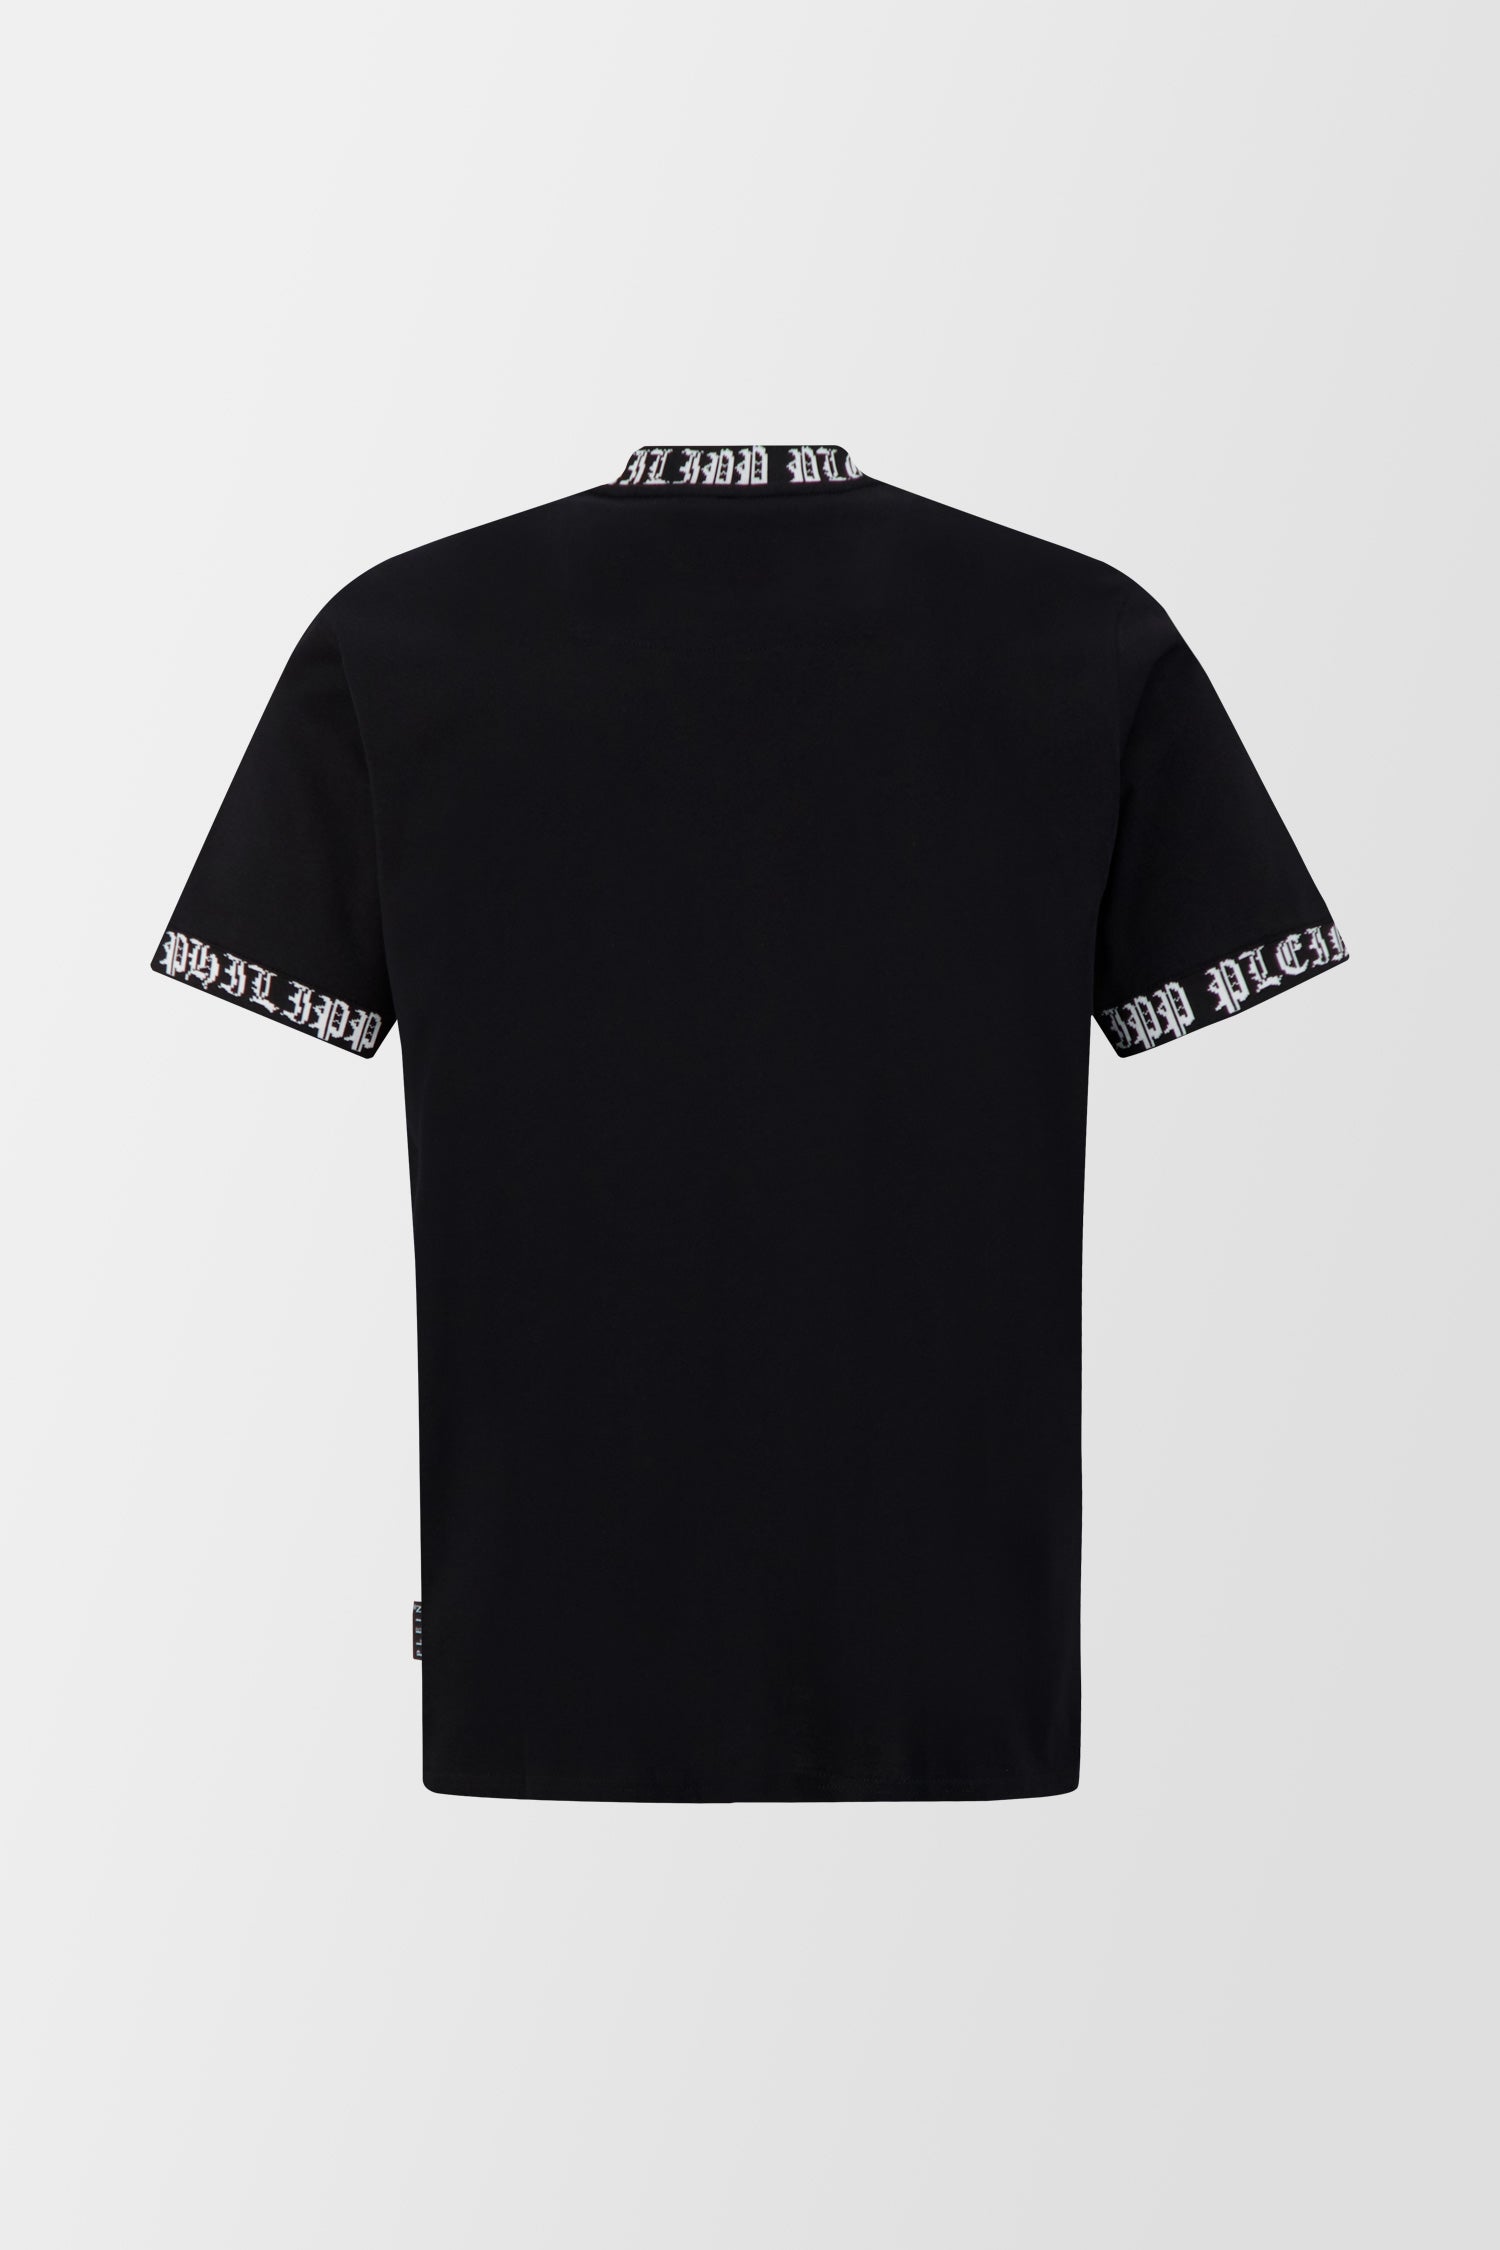 Philipp Plein Black/White Round Neck SS T-Shirt